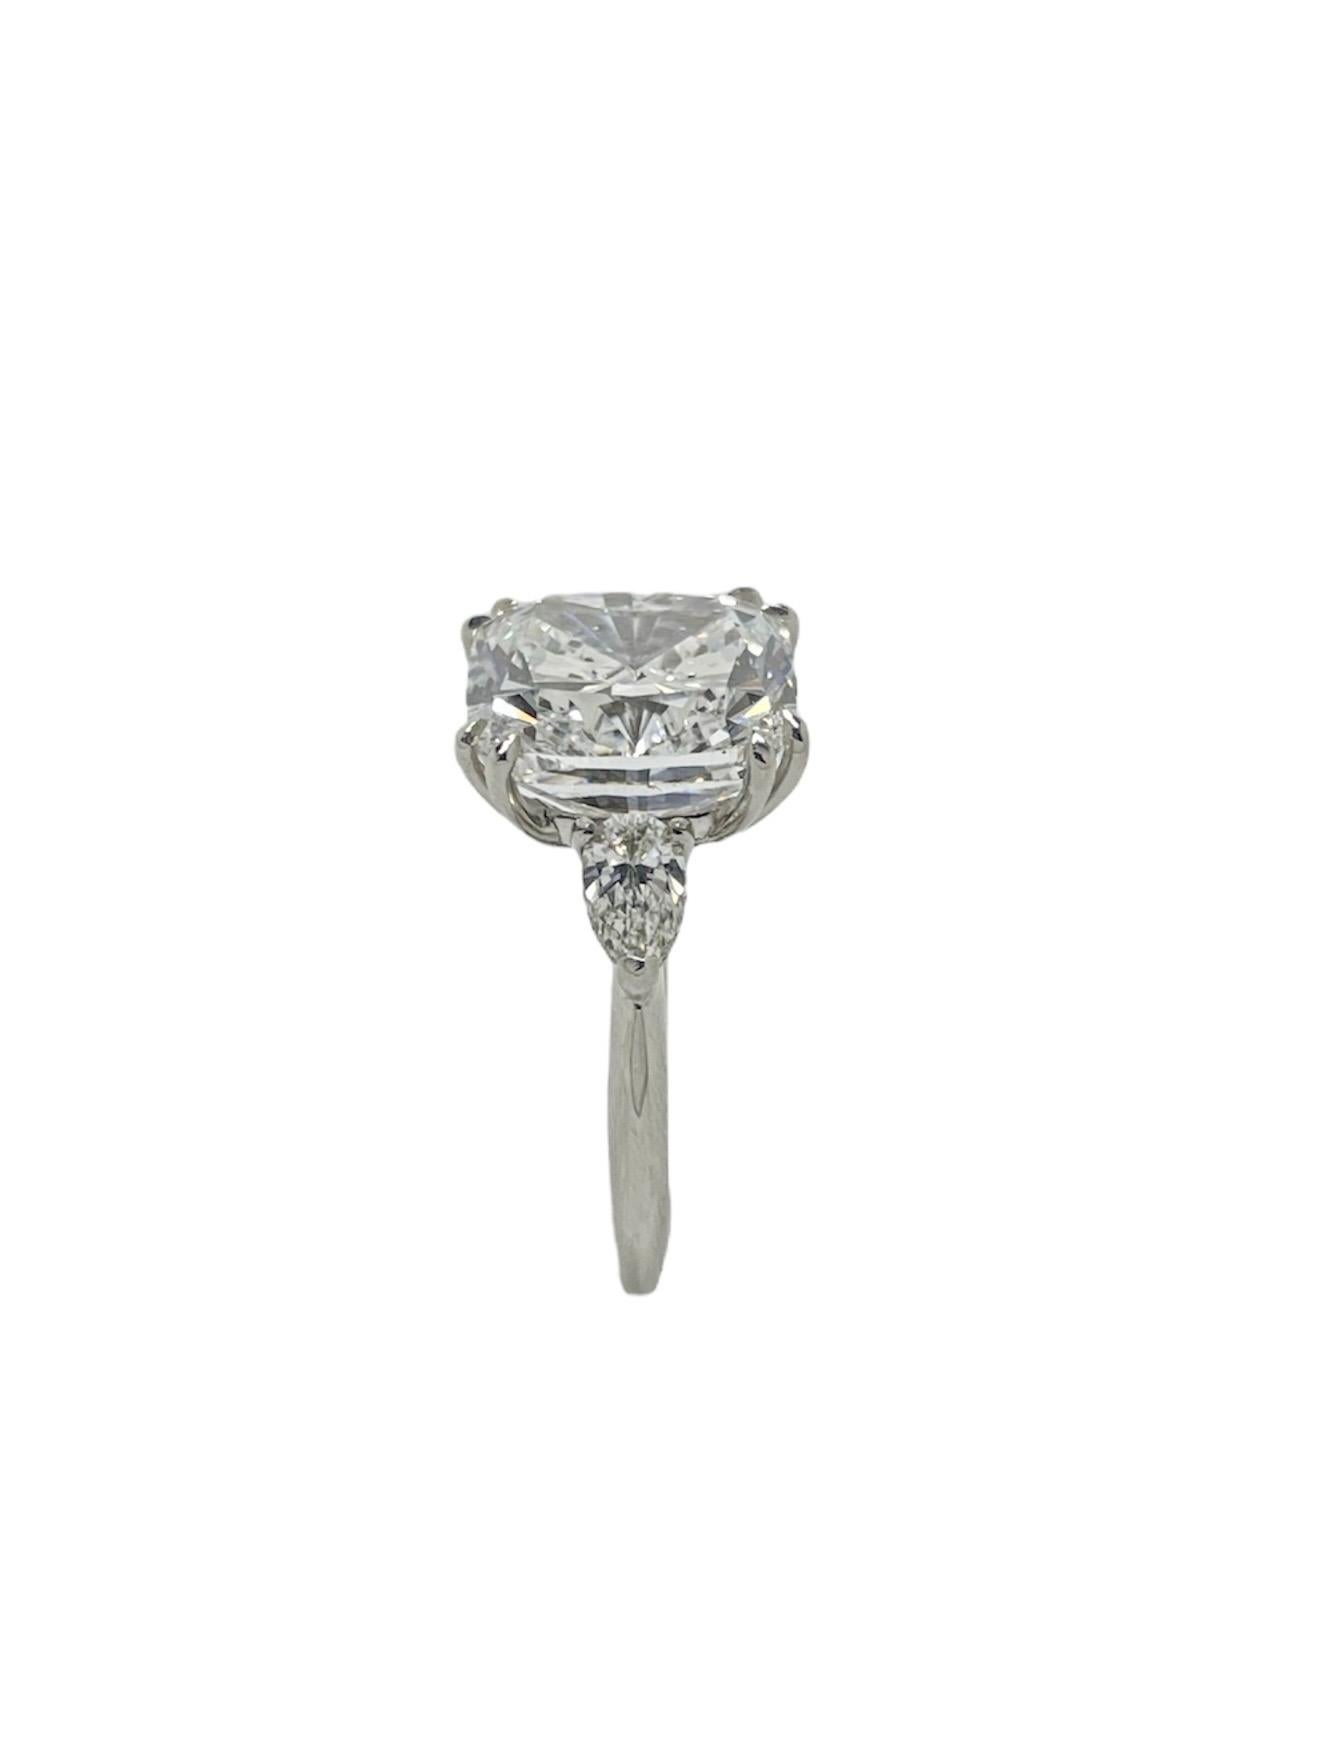 Women's 9.27 Carat Cushion Cut Diamond Engagement Ring For Sale